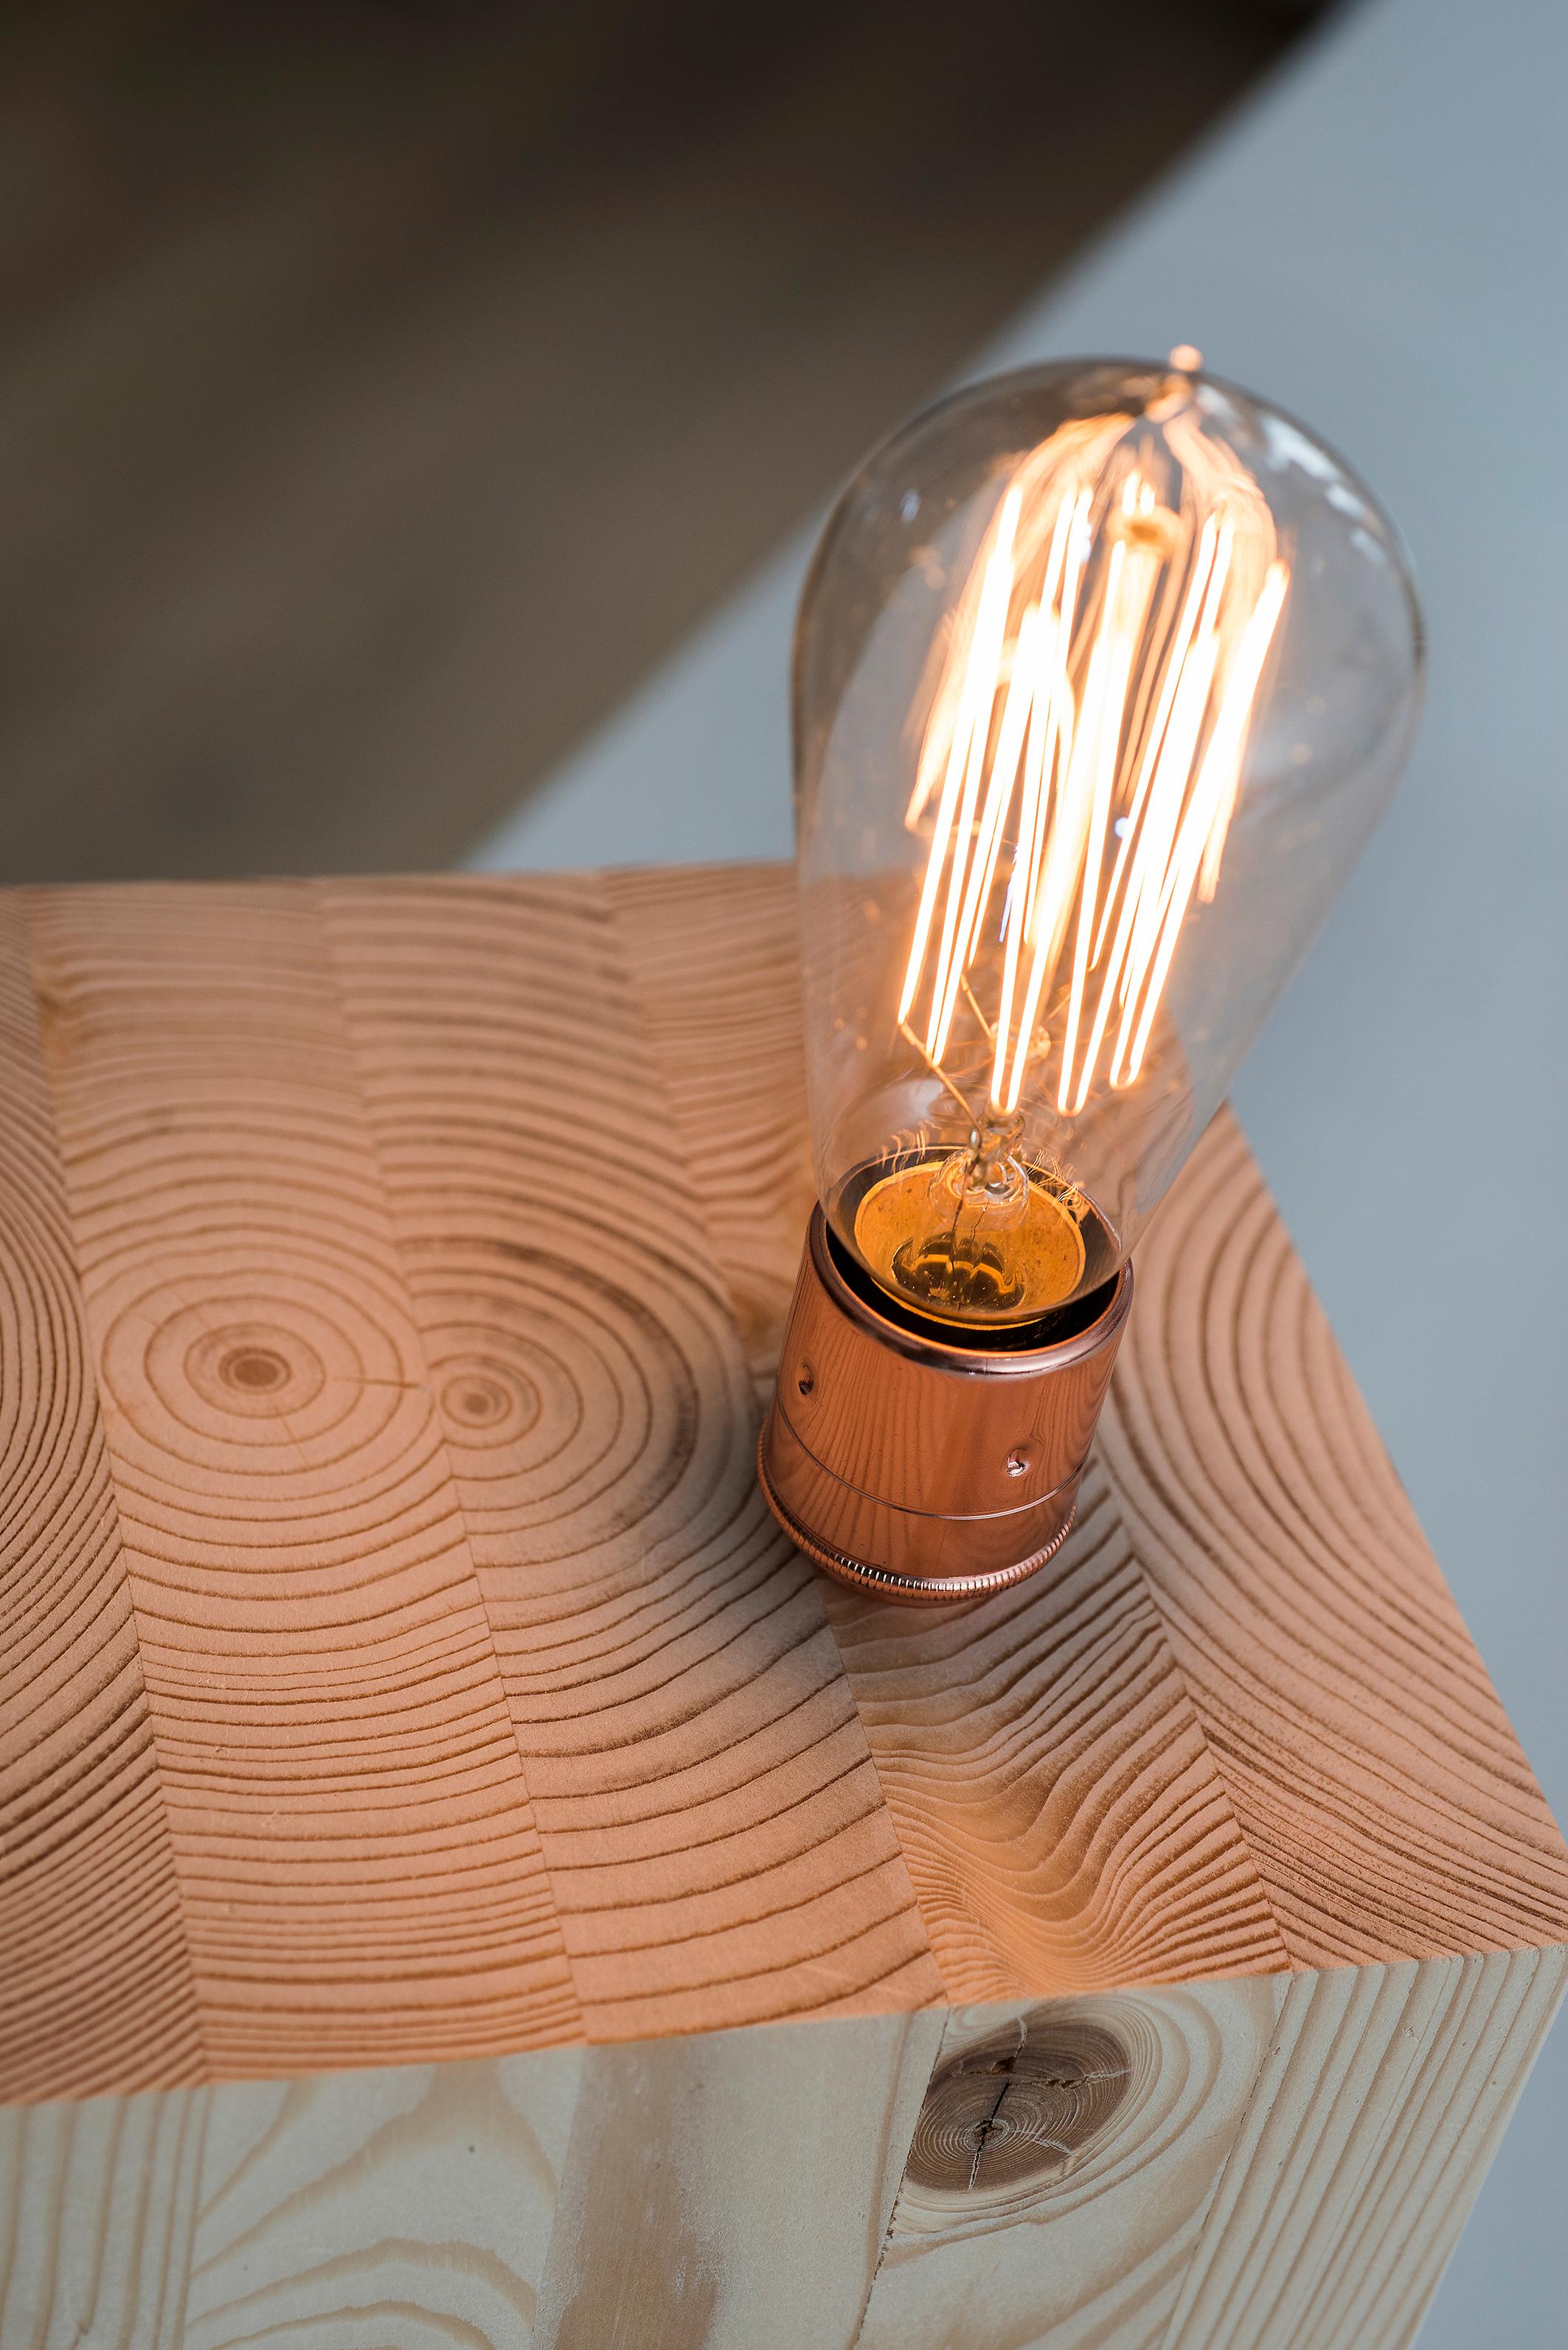 Design Lampe "Woodison" #lampe ©Schneemarie